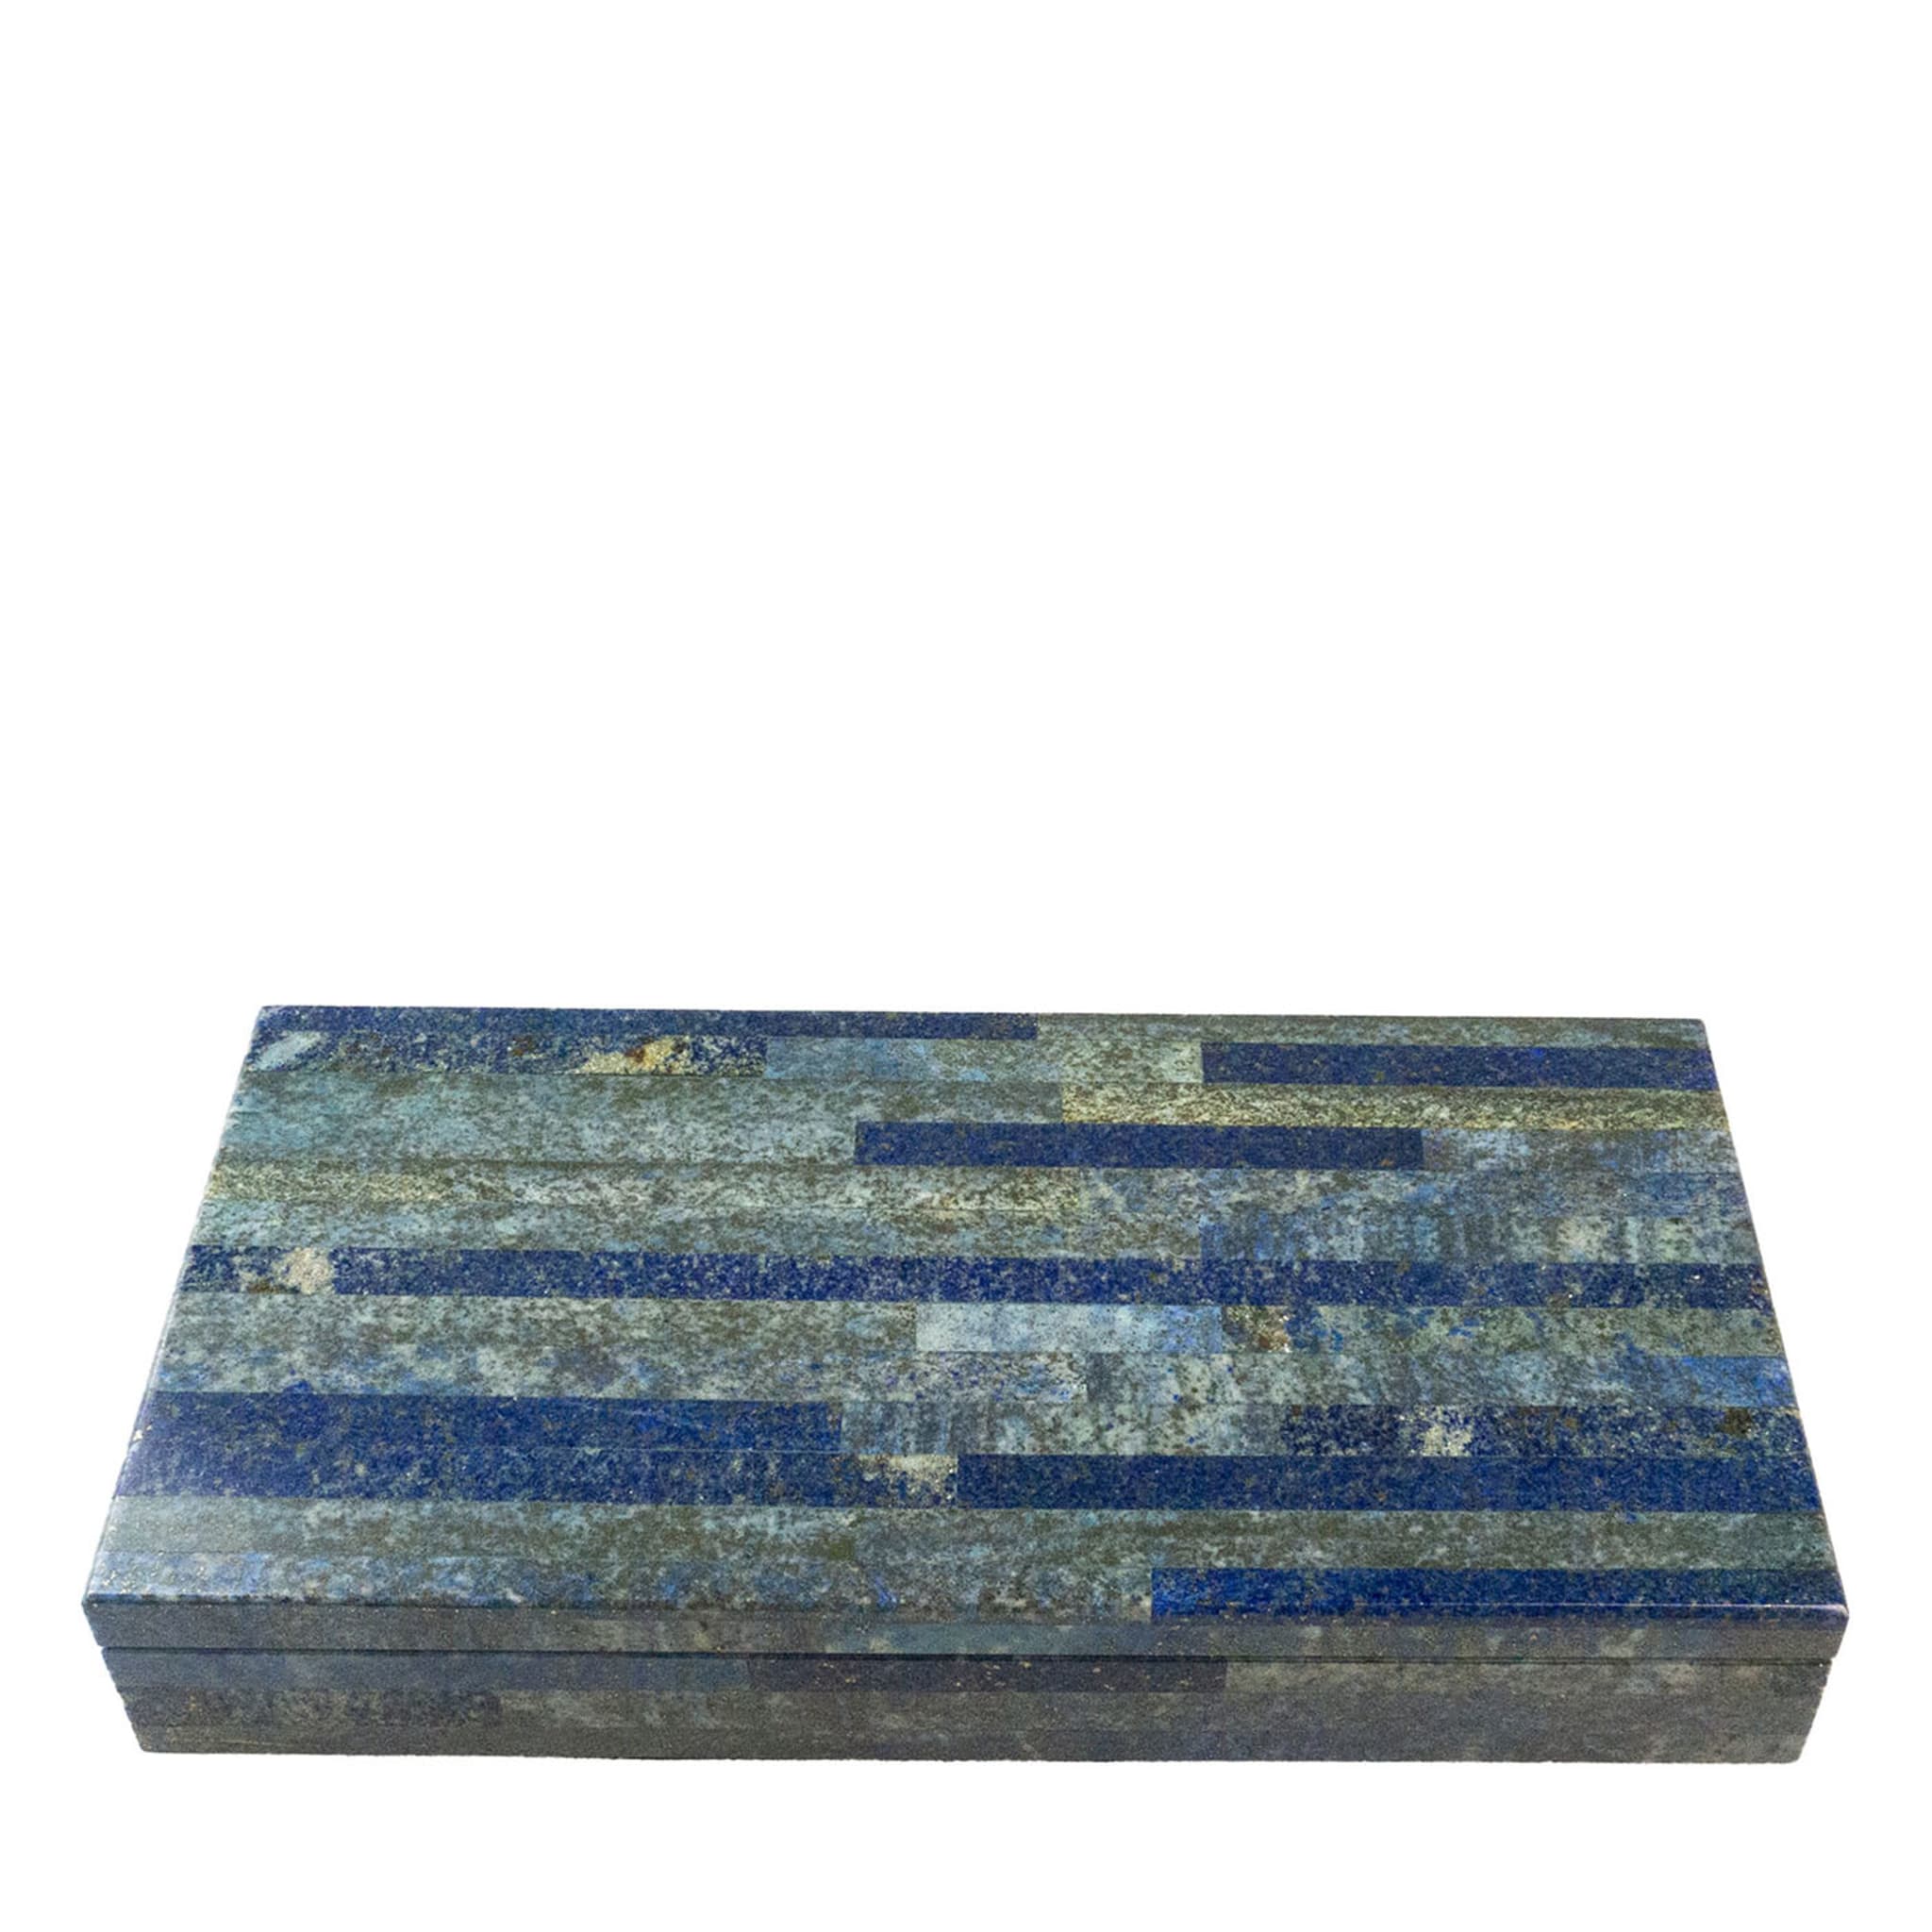 Lapis Lazuli Box #1 - Main view